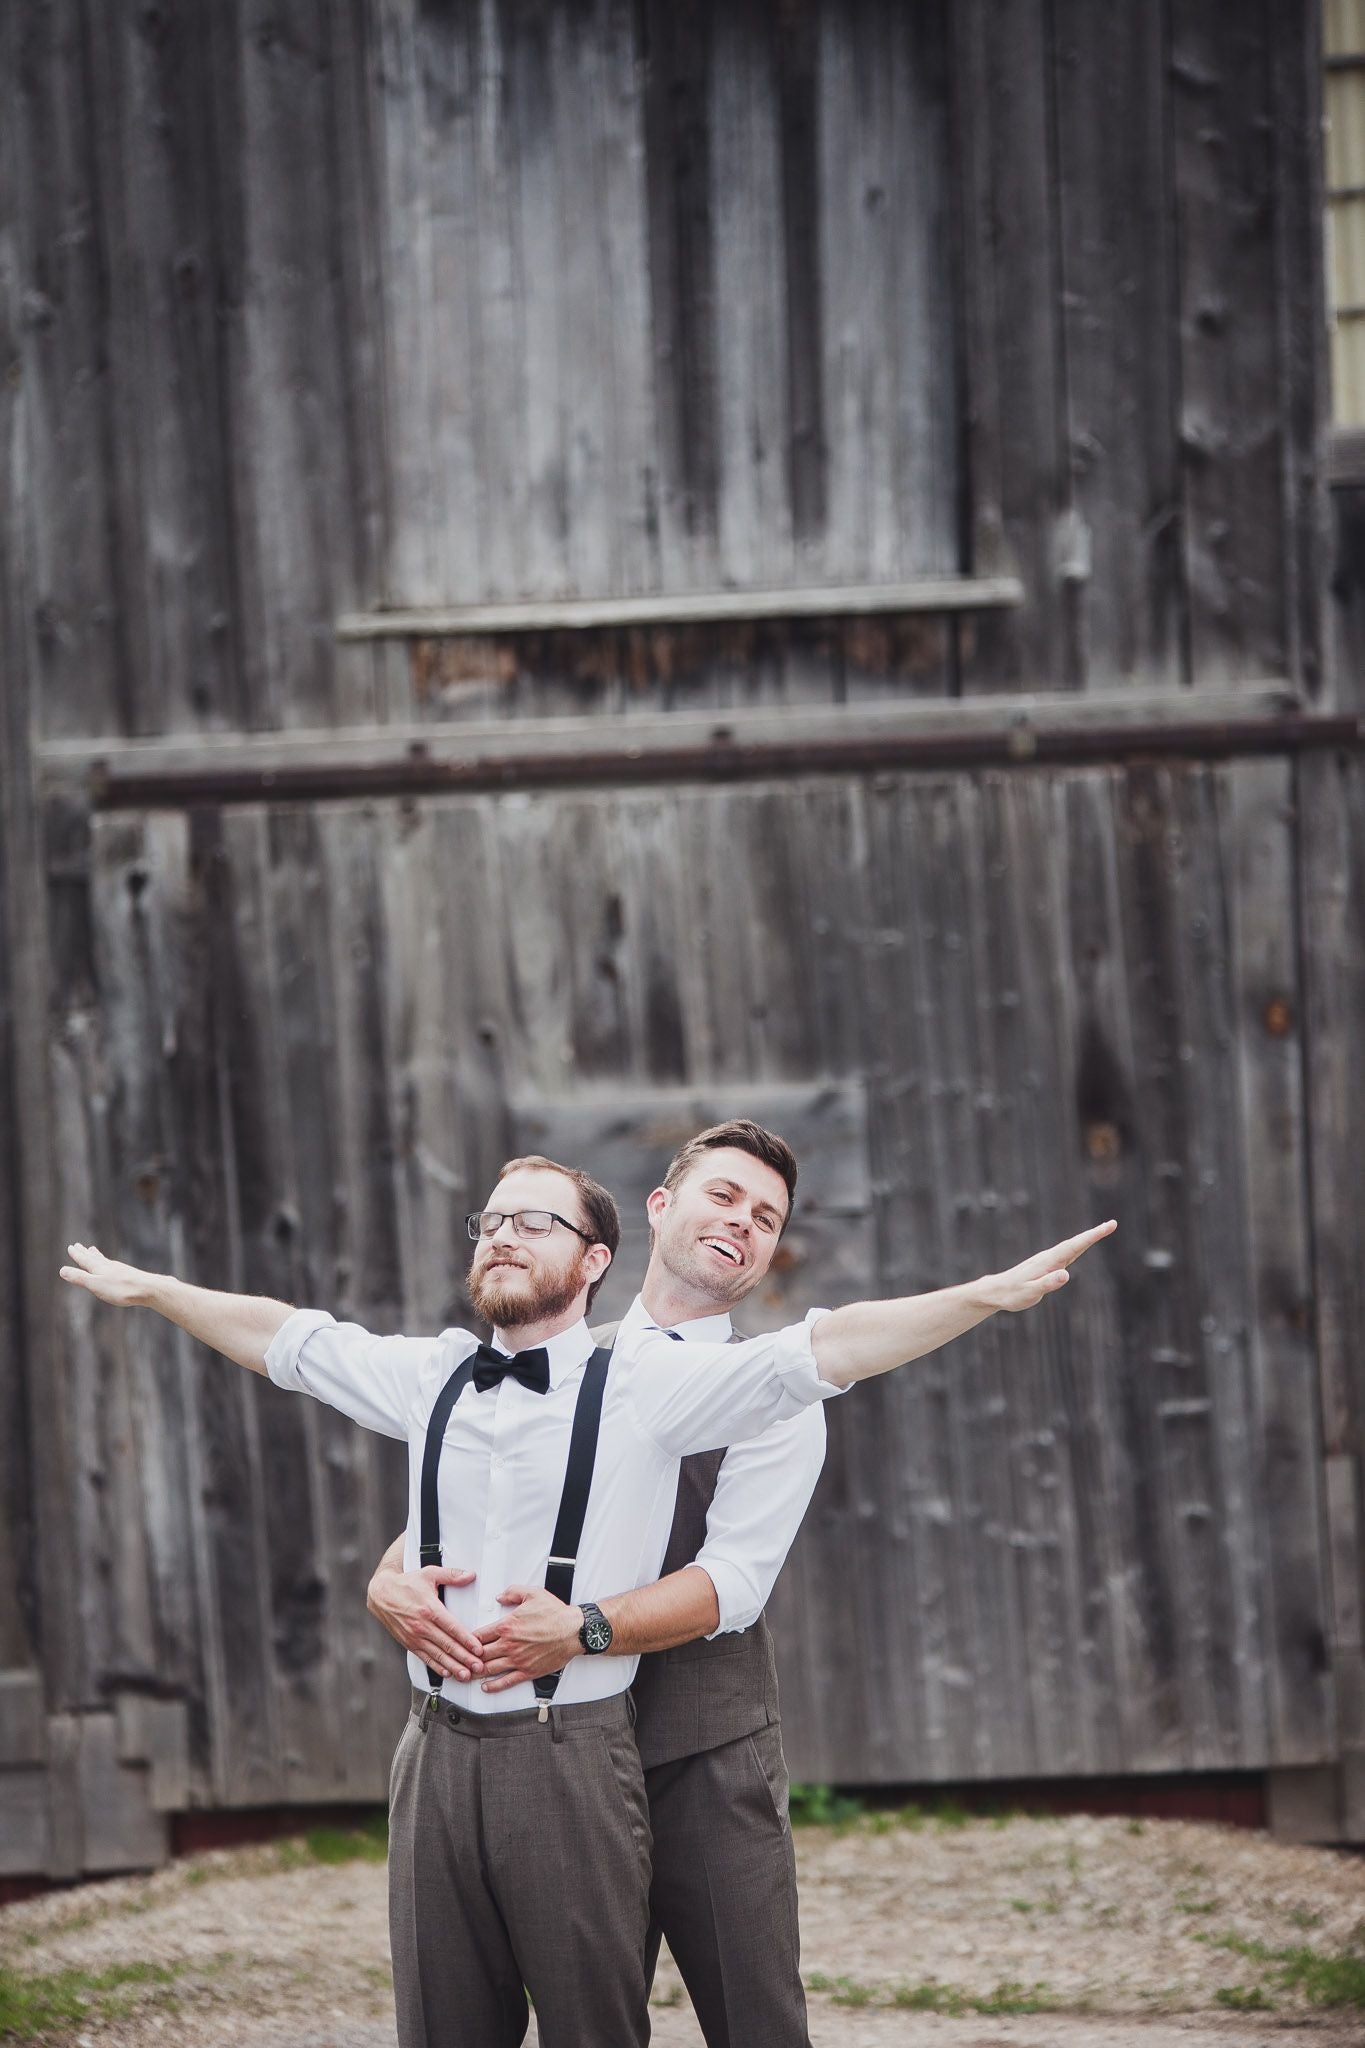 Fun Wedding Photo Ideas Worth Stealing